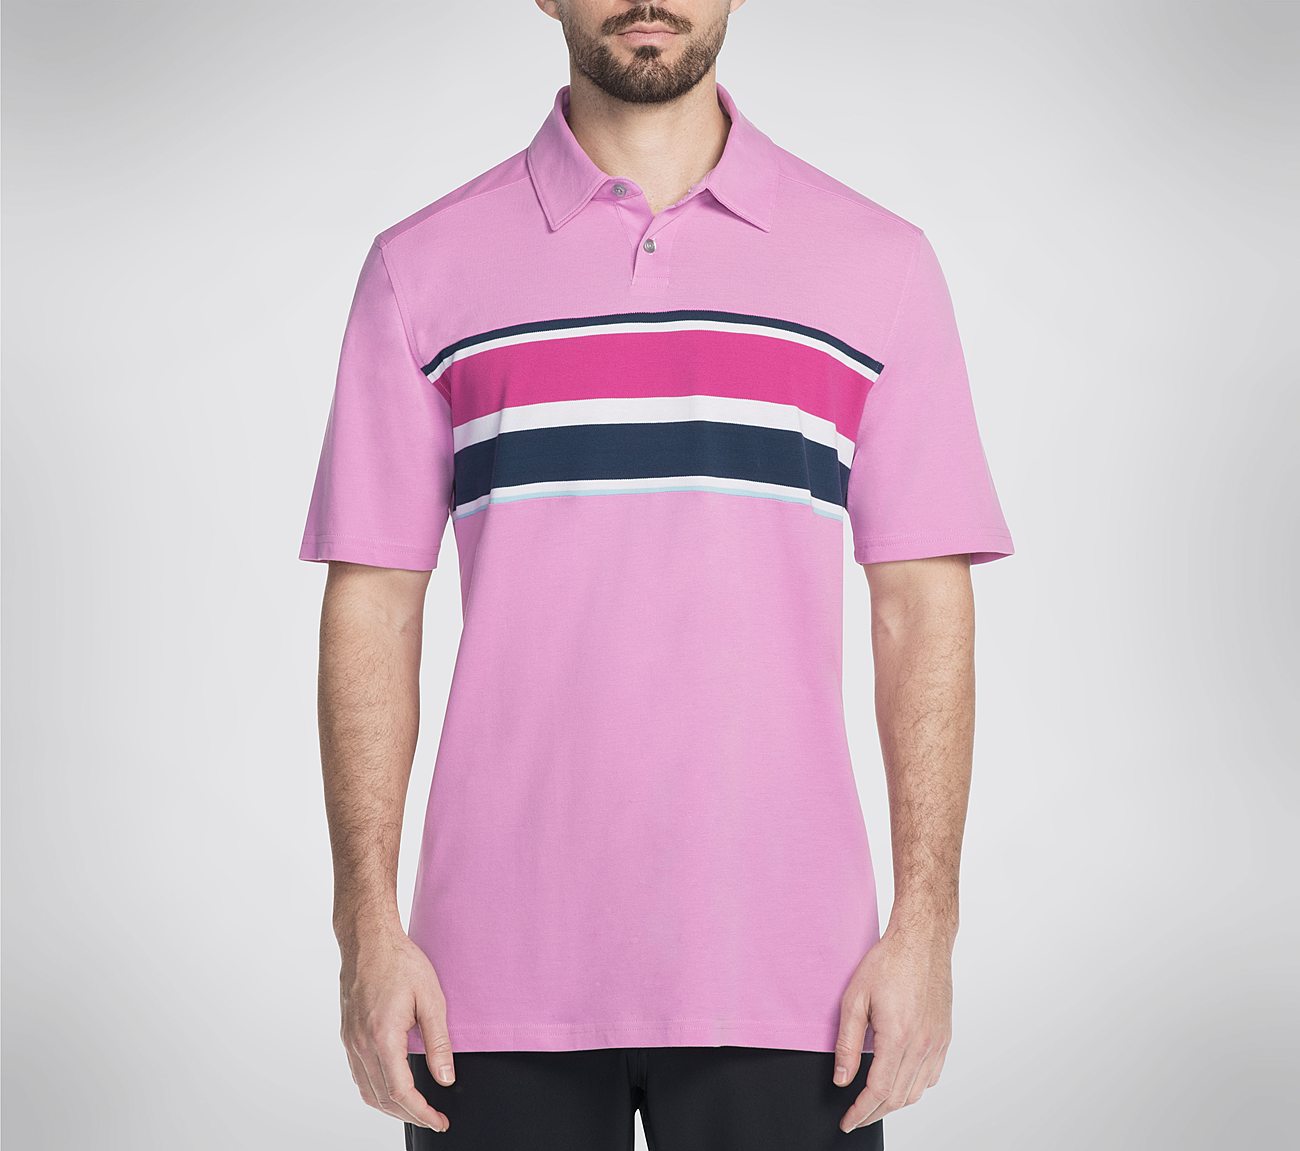 skechers polo shirt pink